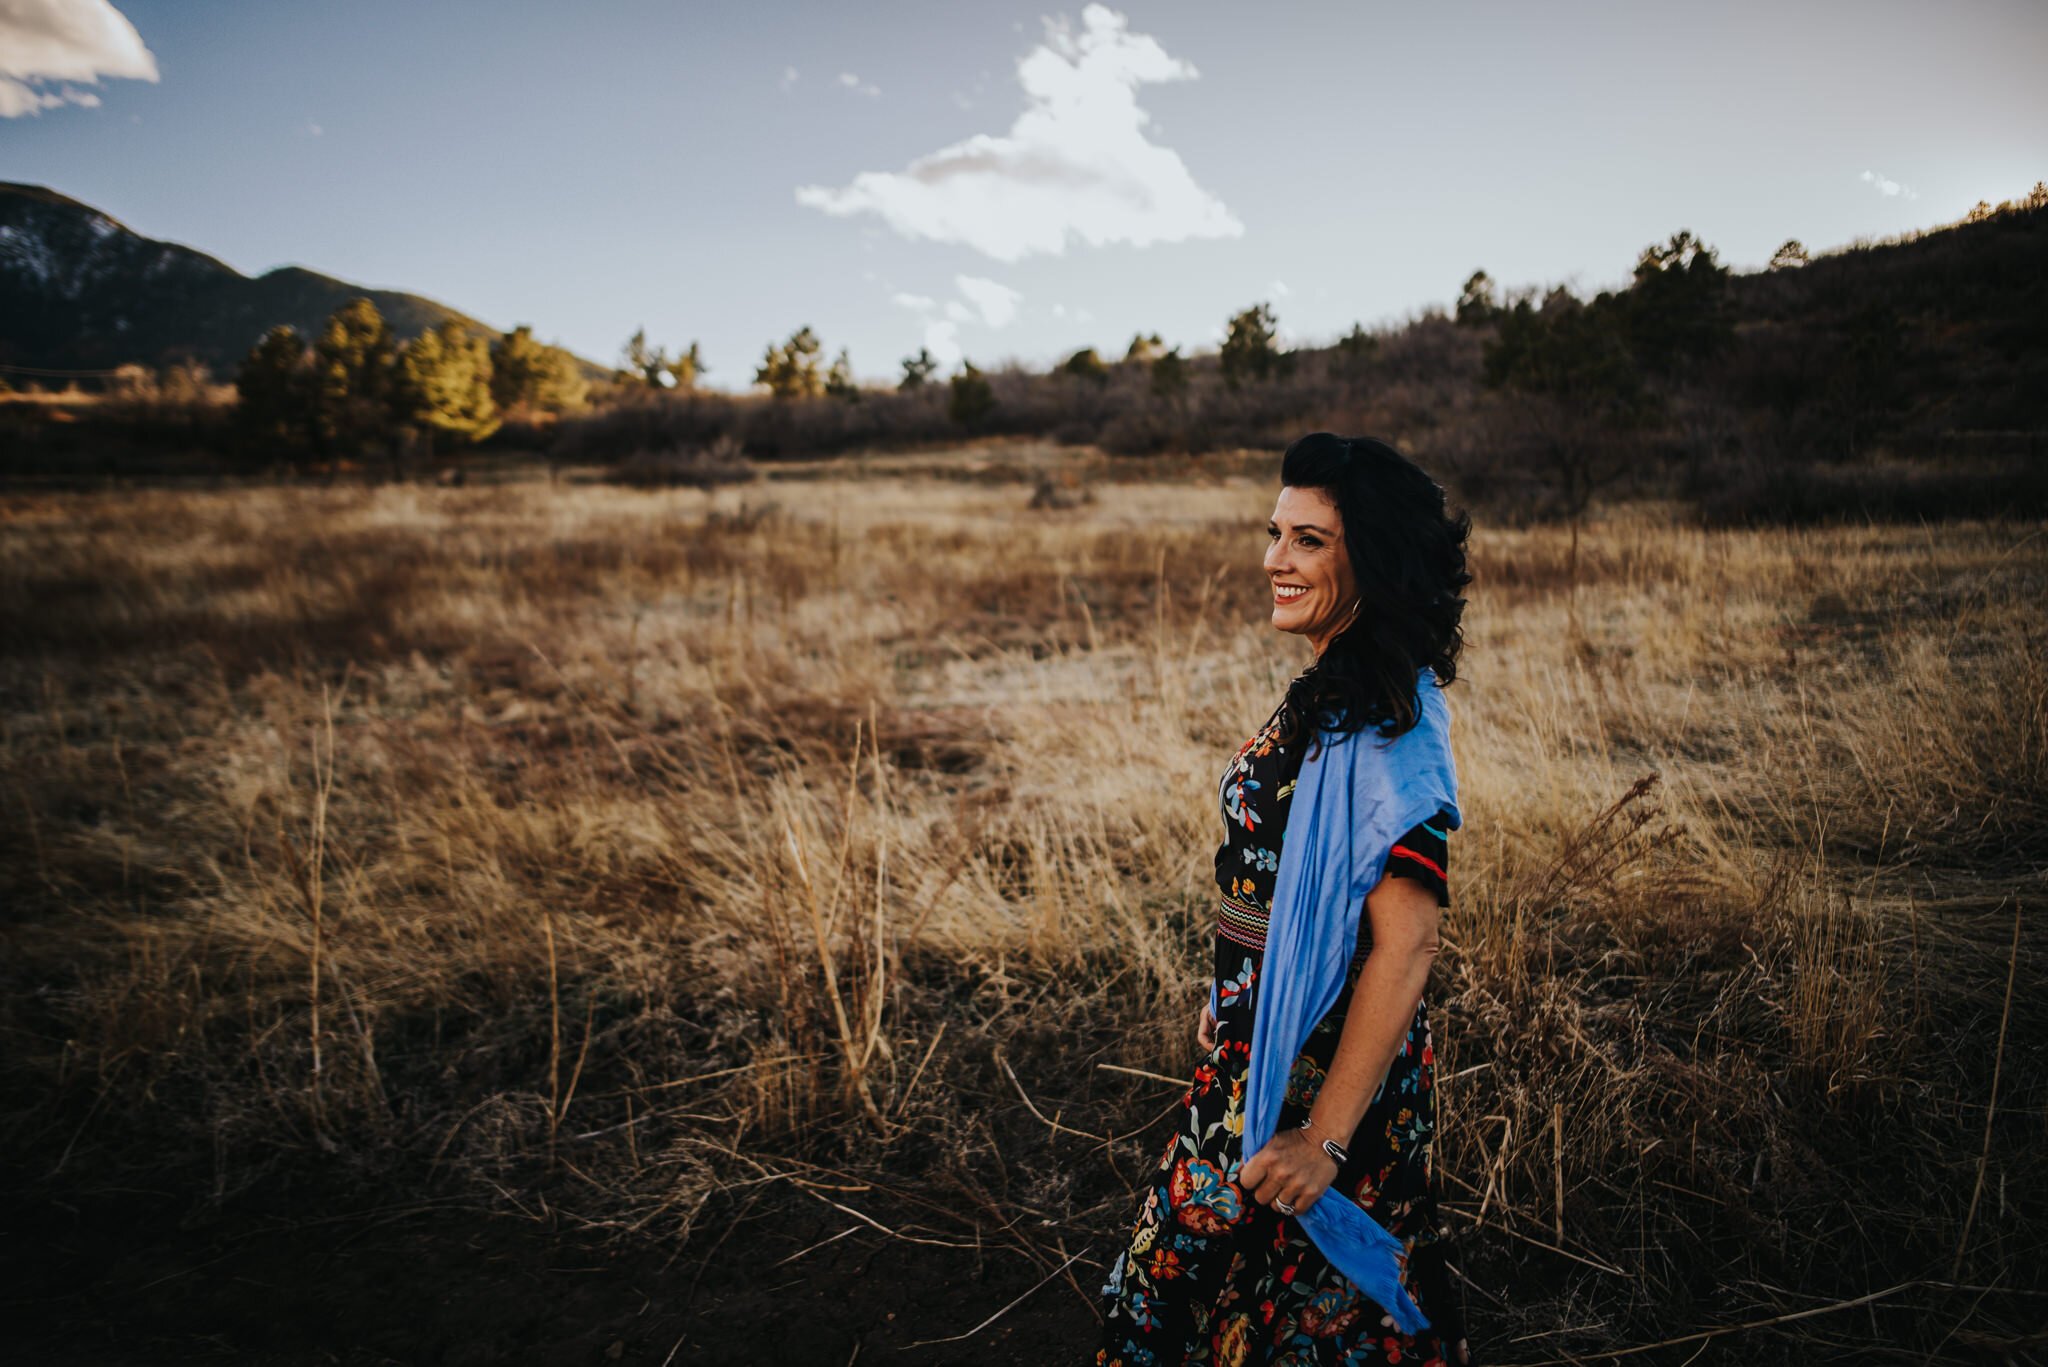 Celi+Turner+Headshots+Colorado+Springs+Colorado+Sunset+Mountains+Field+Woman+Wild+Prairie+Photography-06-2020.jpeg